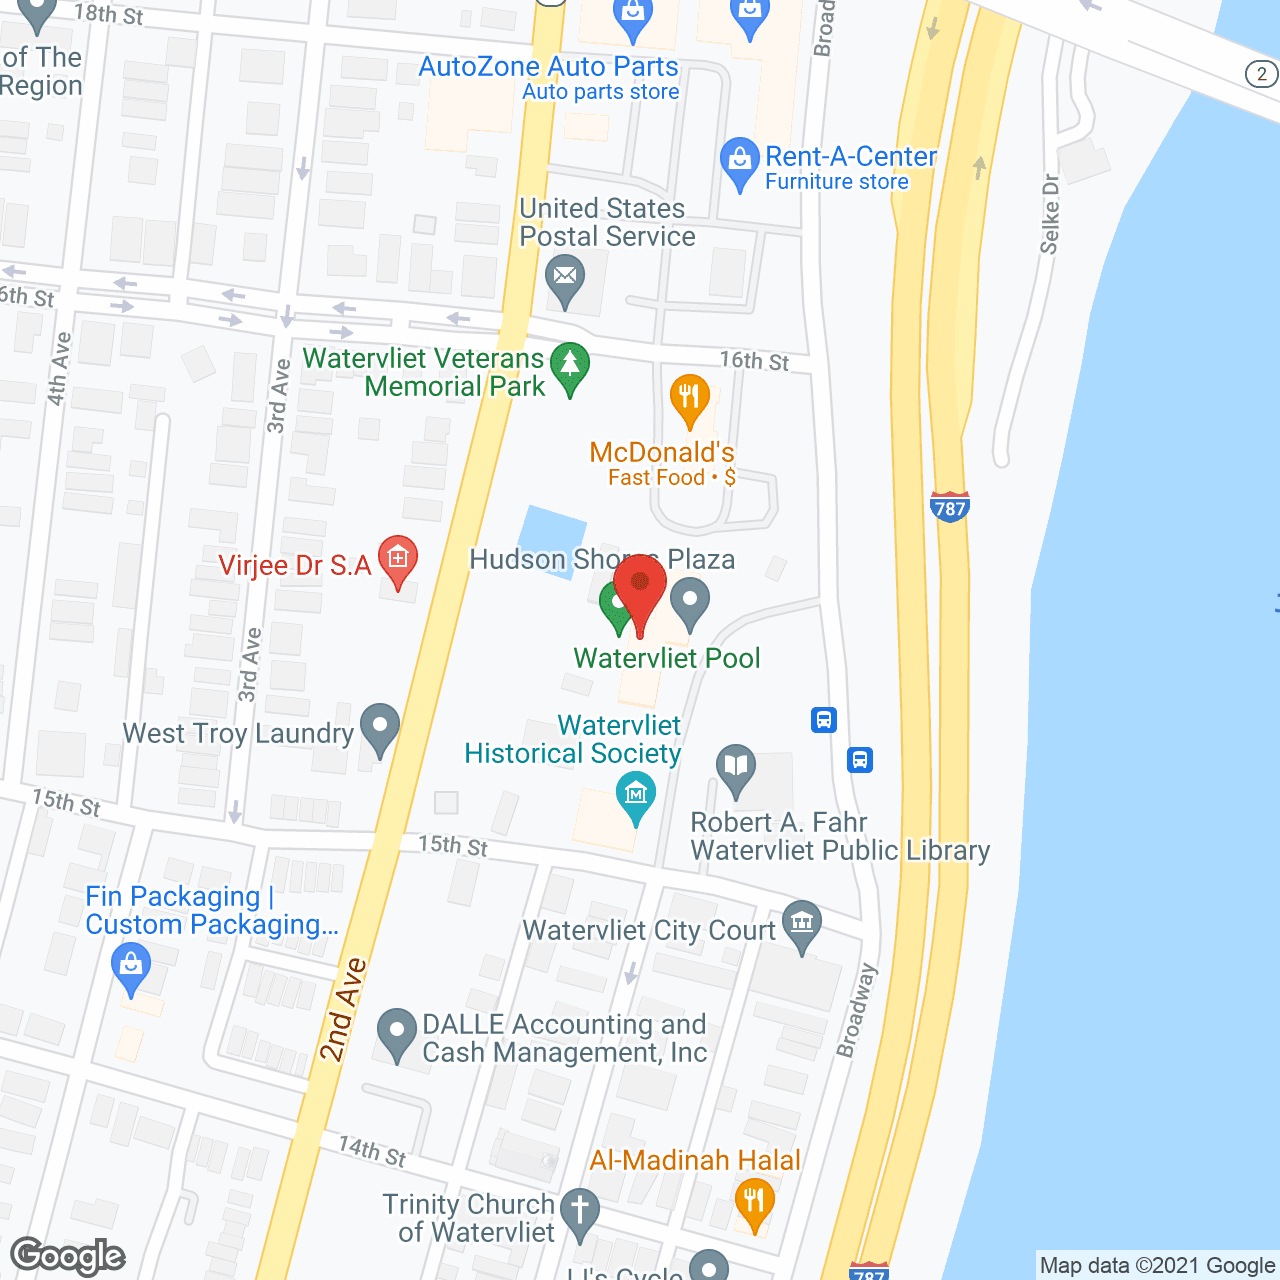 Hudson Shores Plaza in google map